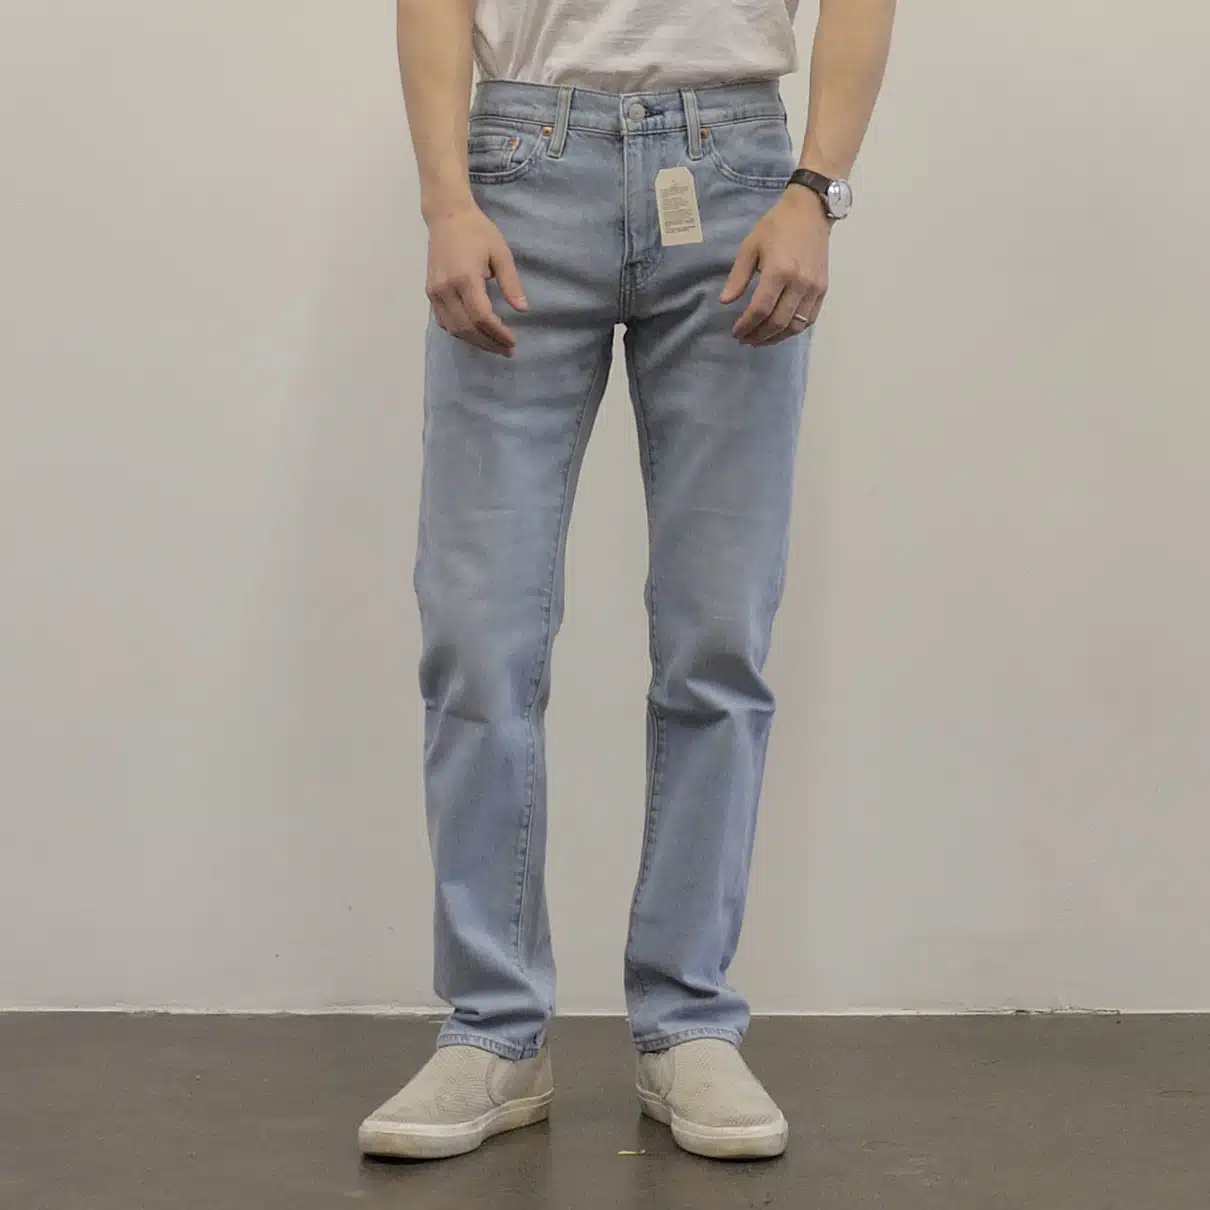 Levi's Fits Explained: Comparison of Jeans Fits - The Modest Man